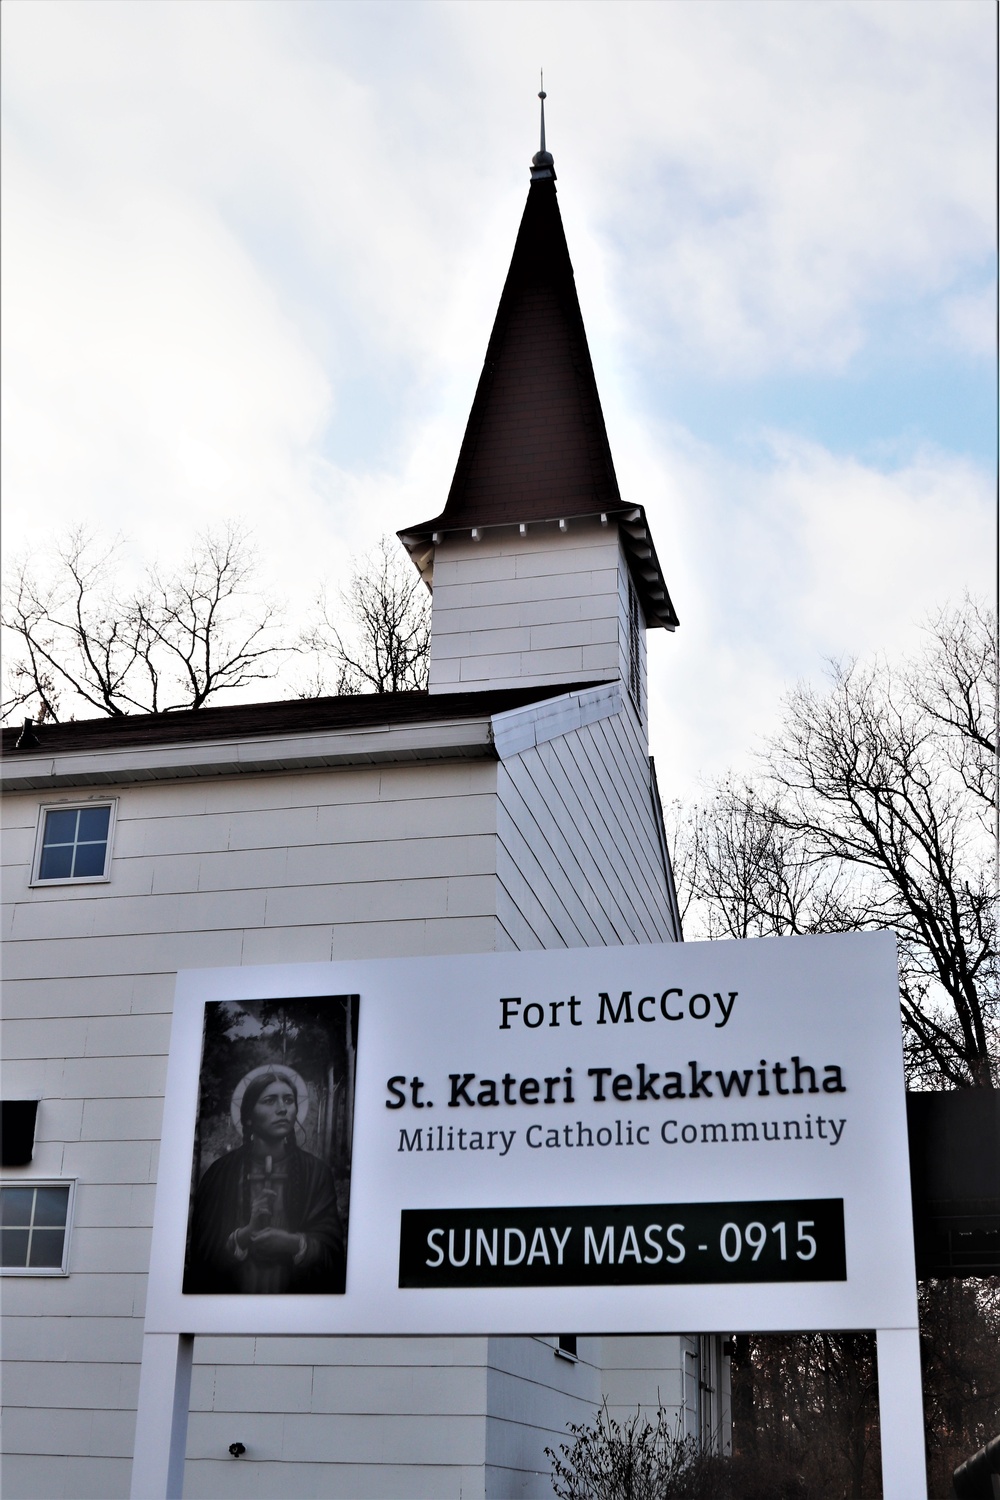 New sign in place for Fort McCoy's Saint Kateri Tekakwitha Military Catholic Community